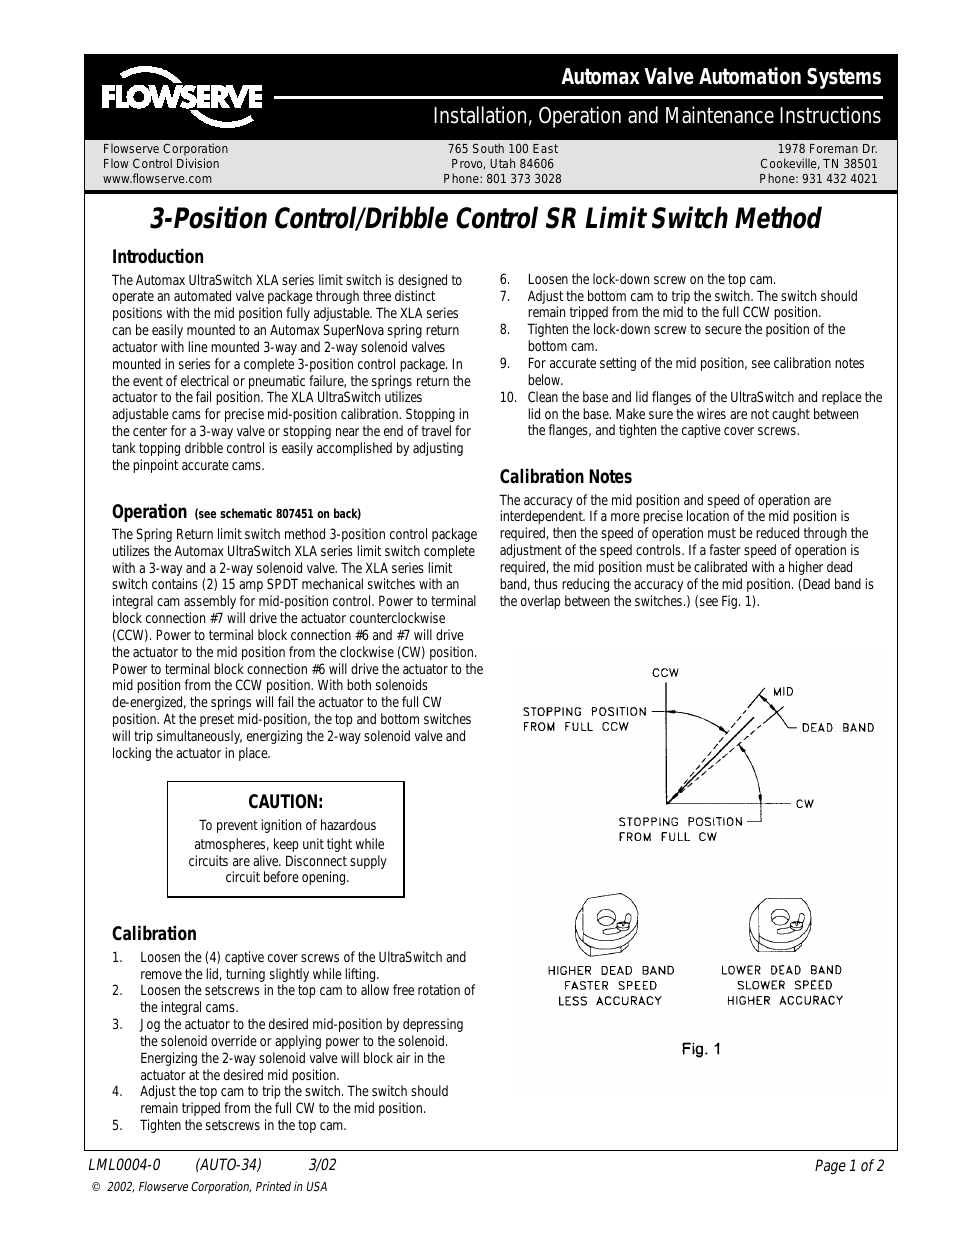 SR Limit Switch Method Dribble Control